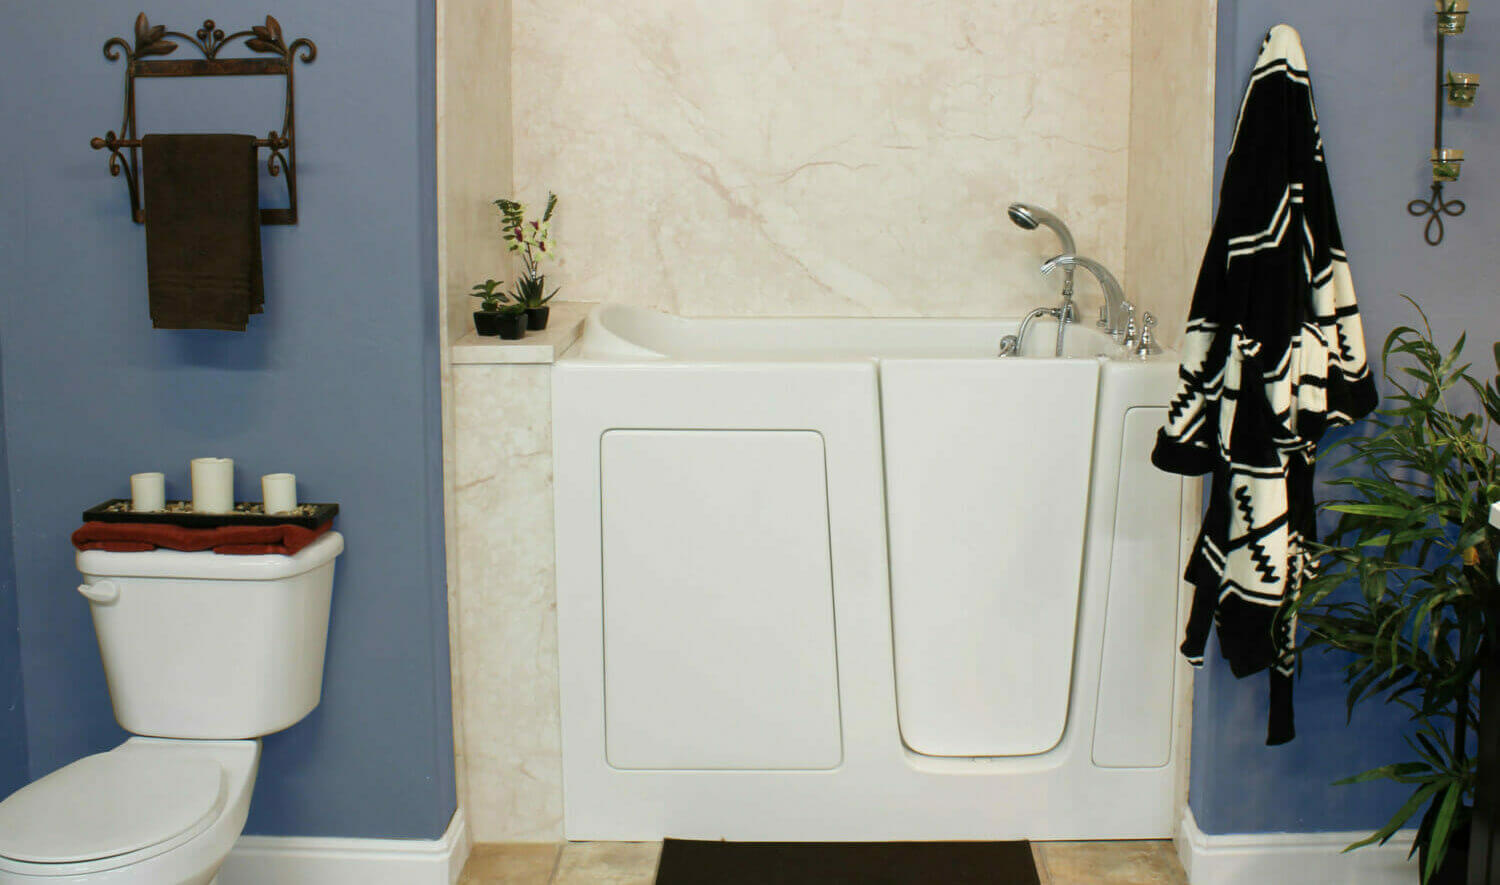 Five Star Bath Solutions of Arlington Heights Walk-in Bathtub Installation